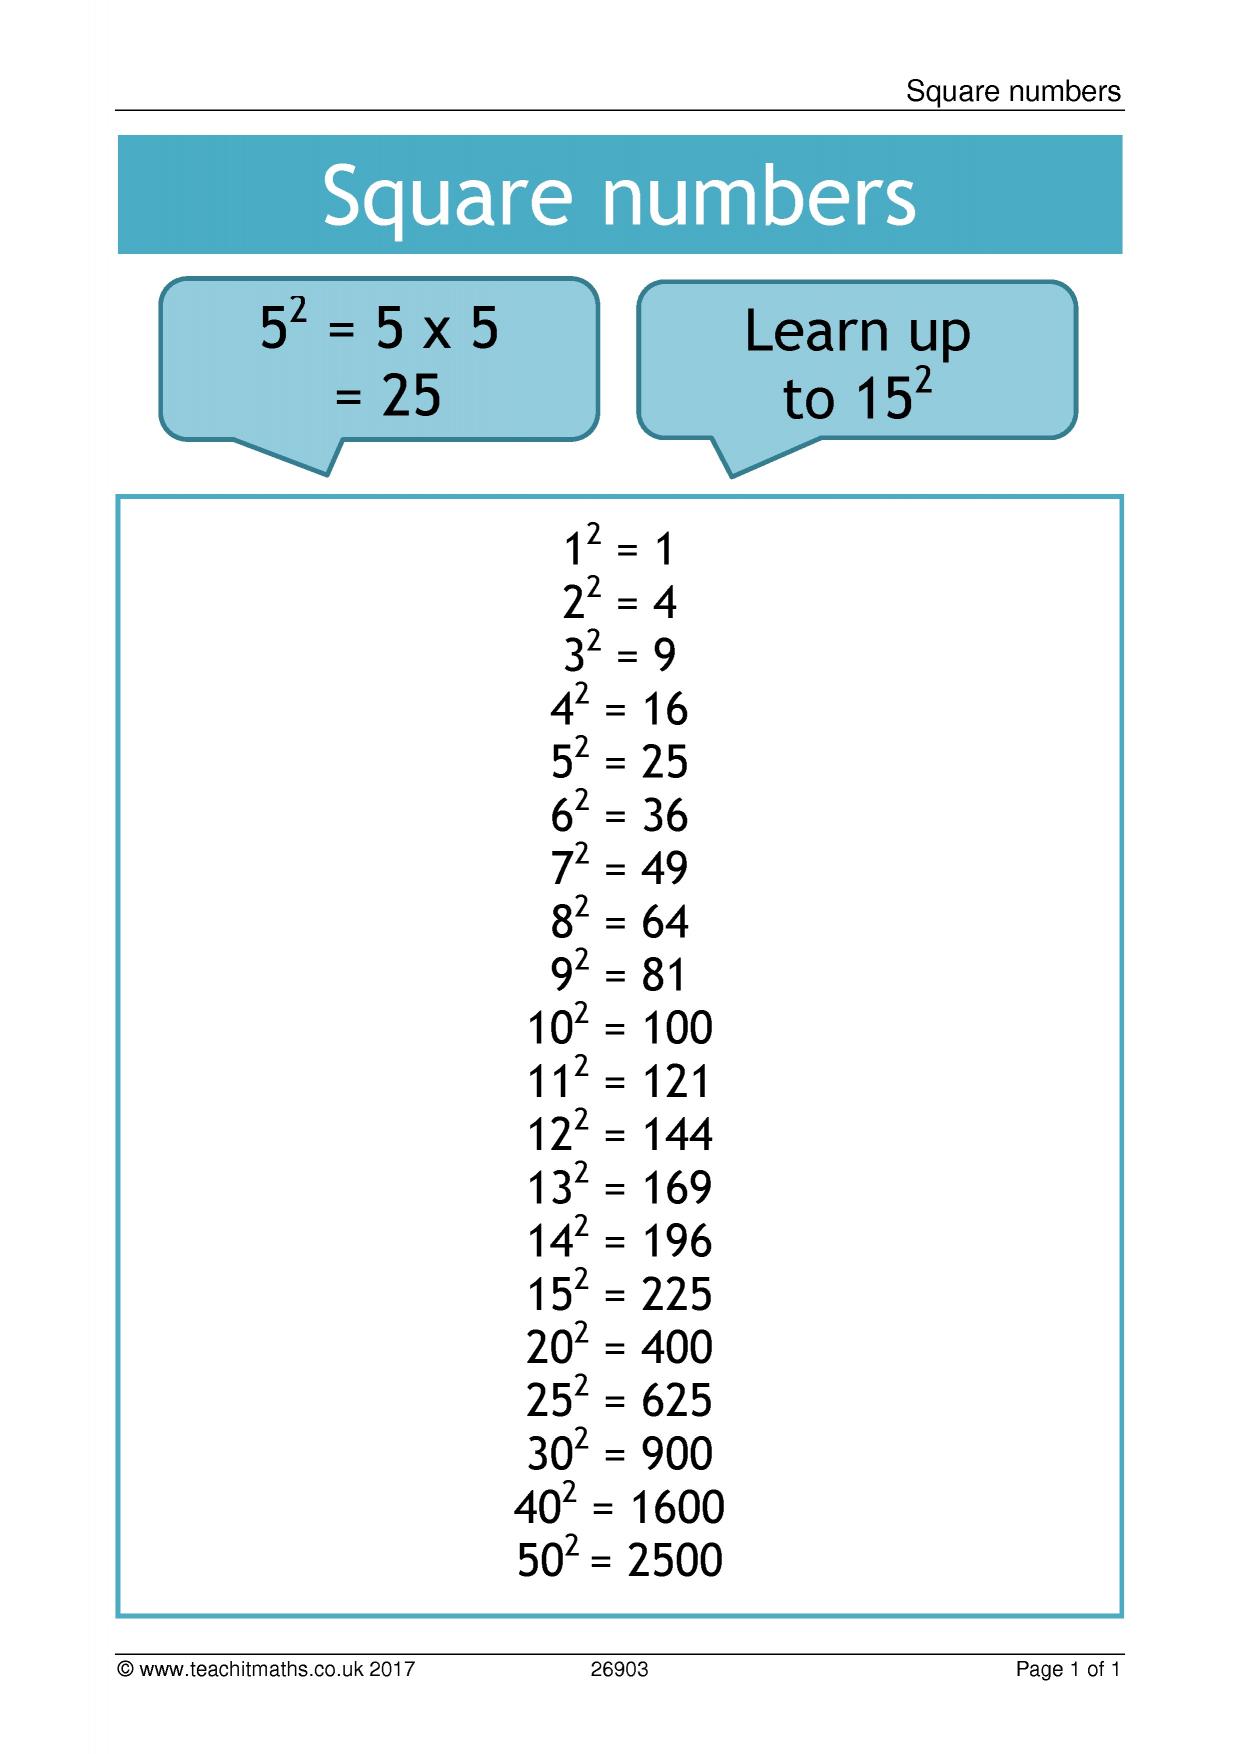 square-numbers-poster-ks3-4-maths-teachit